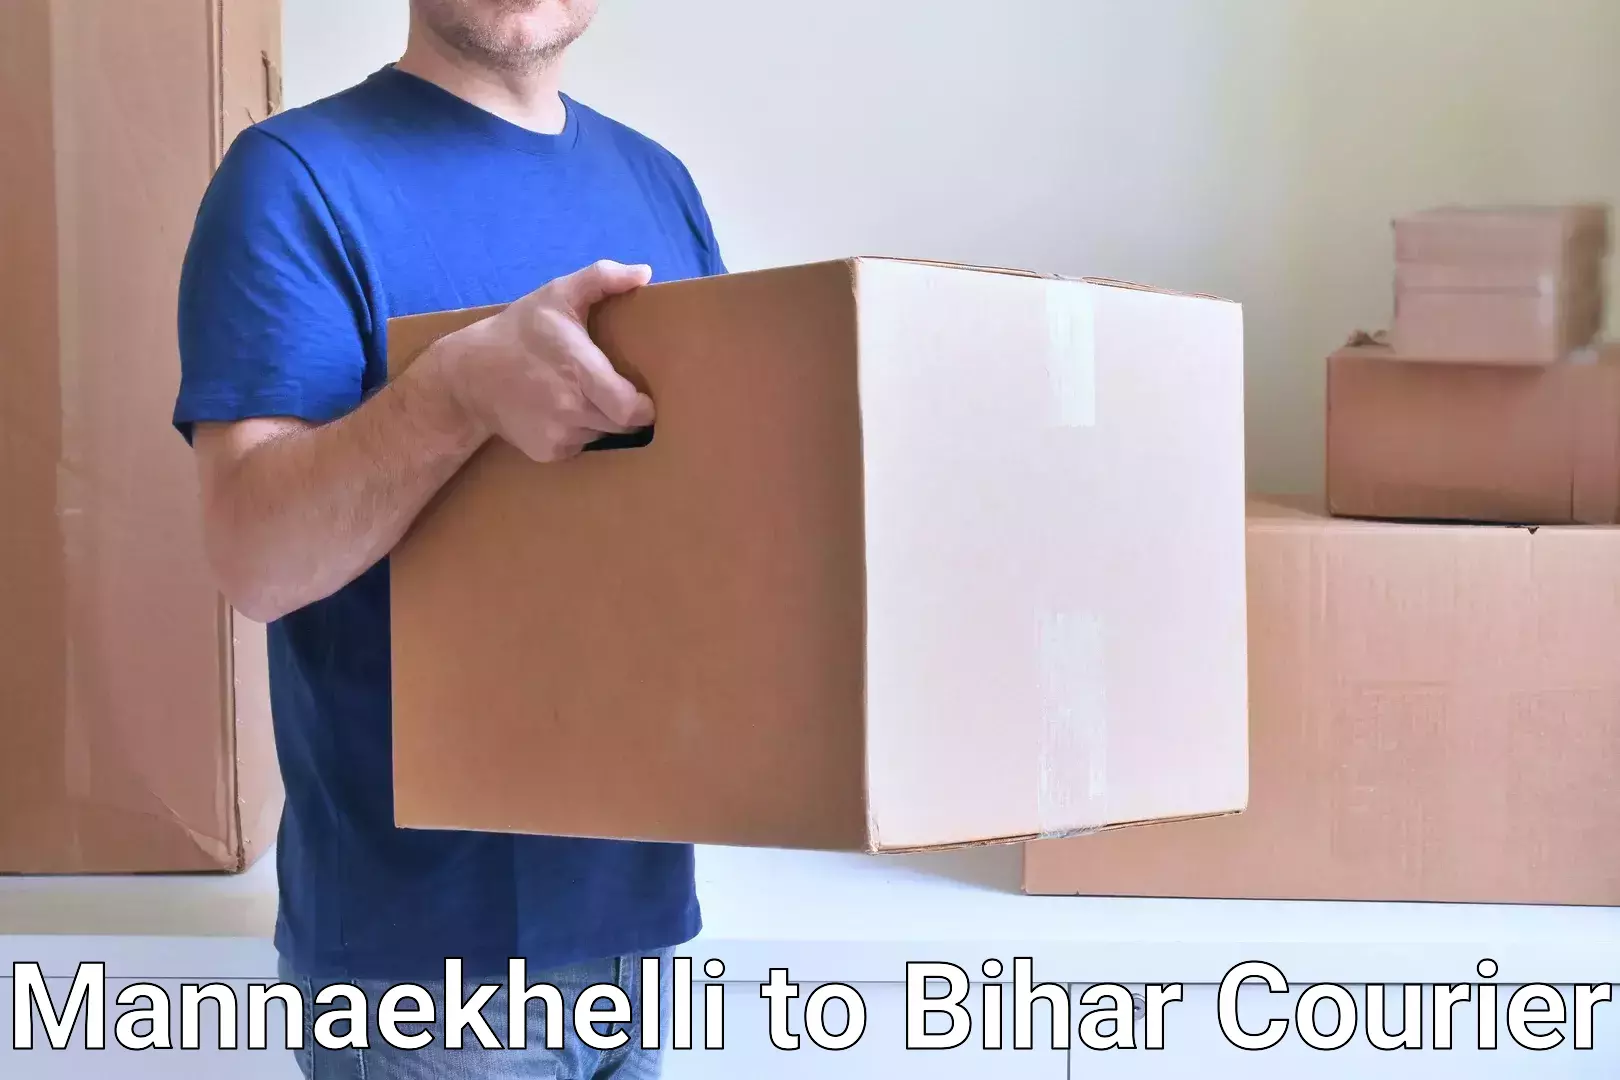 Global shipping networks Mannaekhelli to Bihar